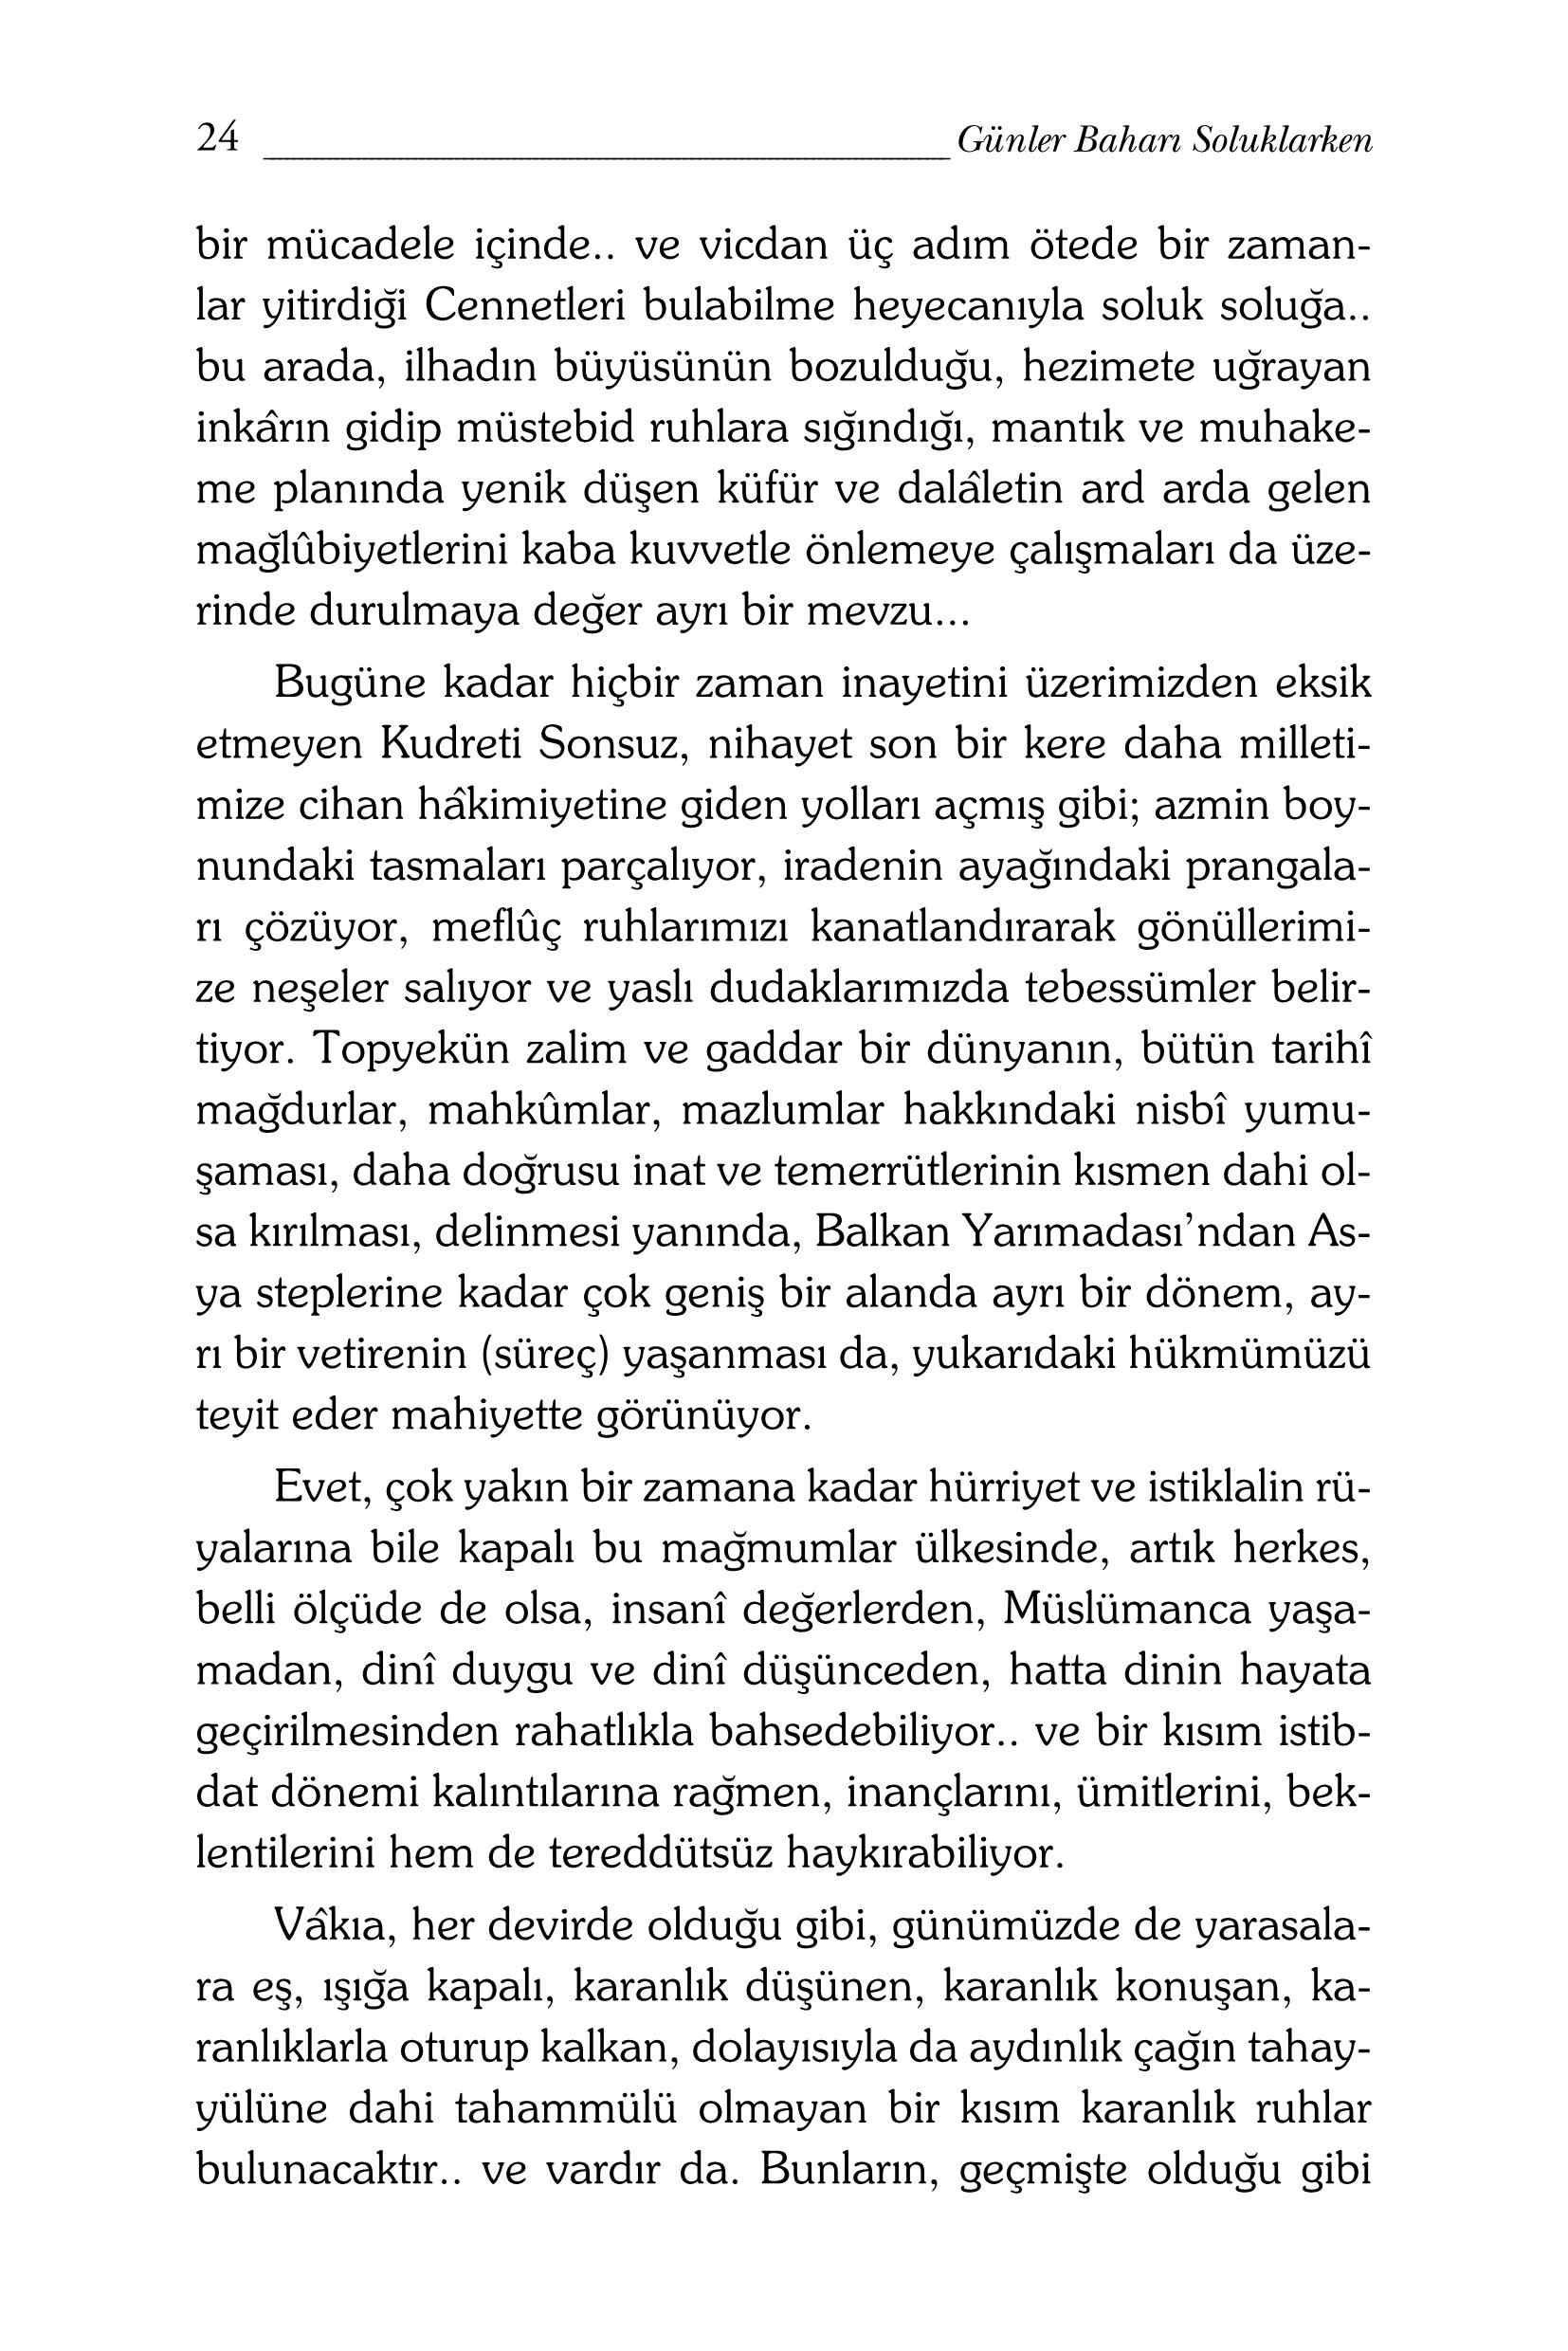 Cag ve Nesil-5-Gunler Bahari Soluklarken - M F Gulen.pdf, 177-Sayfa 